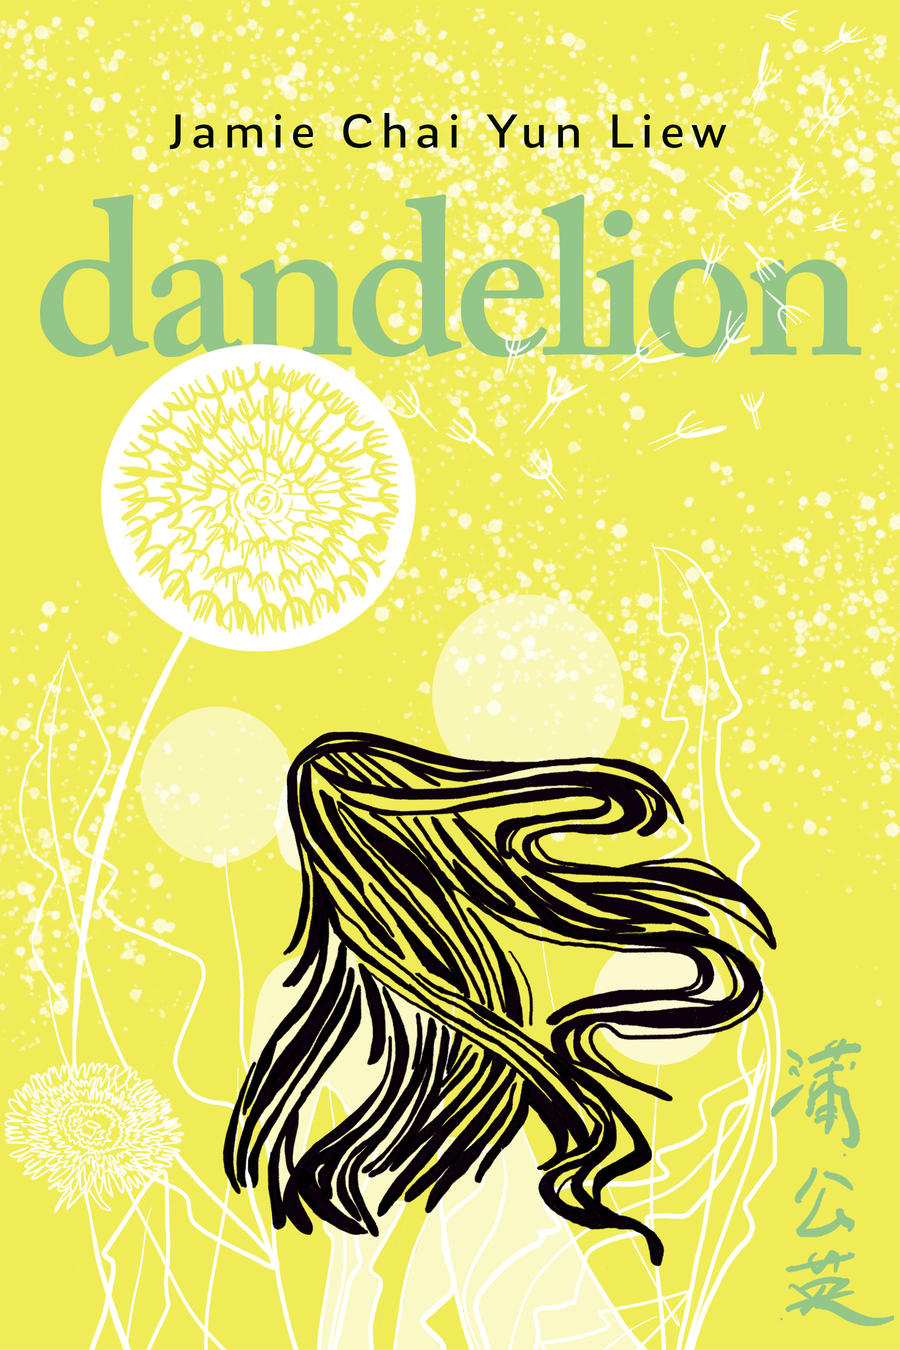 Jamie Chai Yun Liew: Dandelion